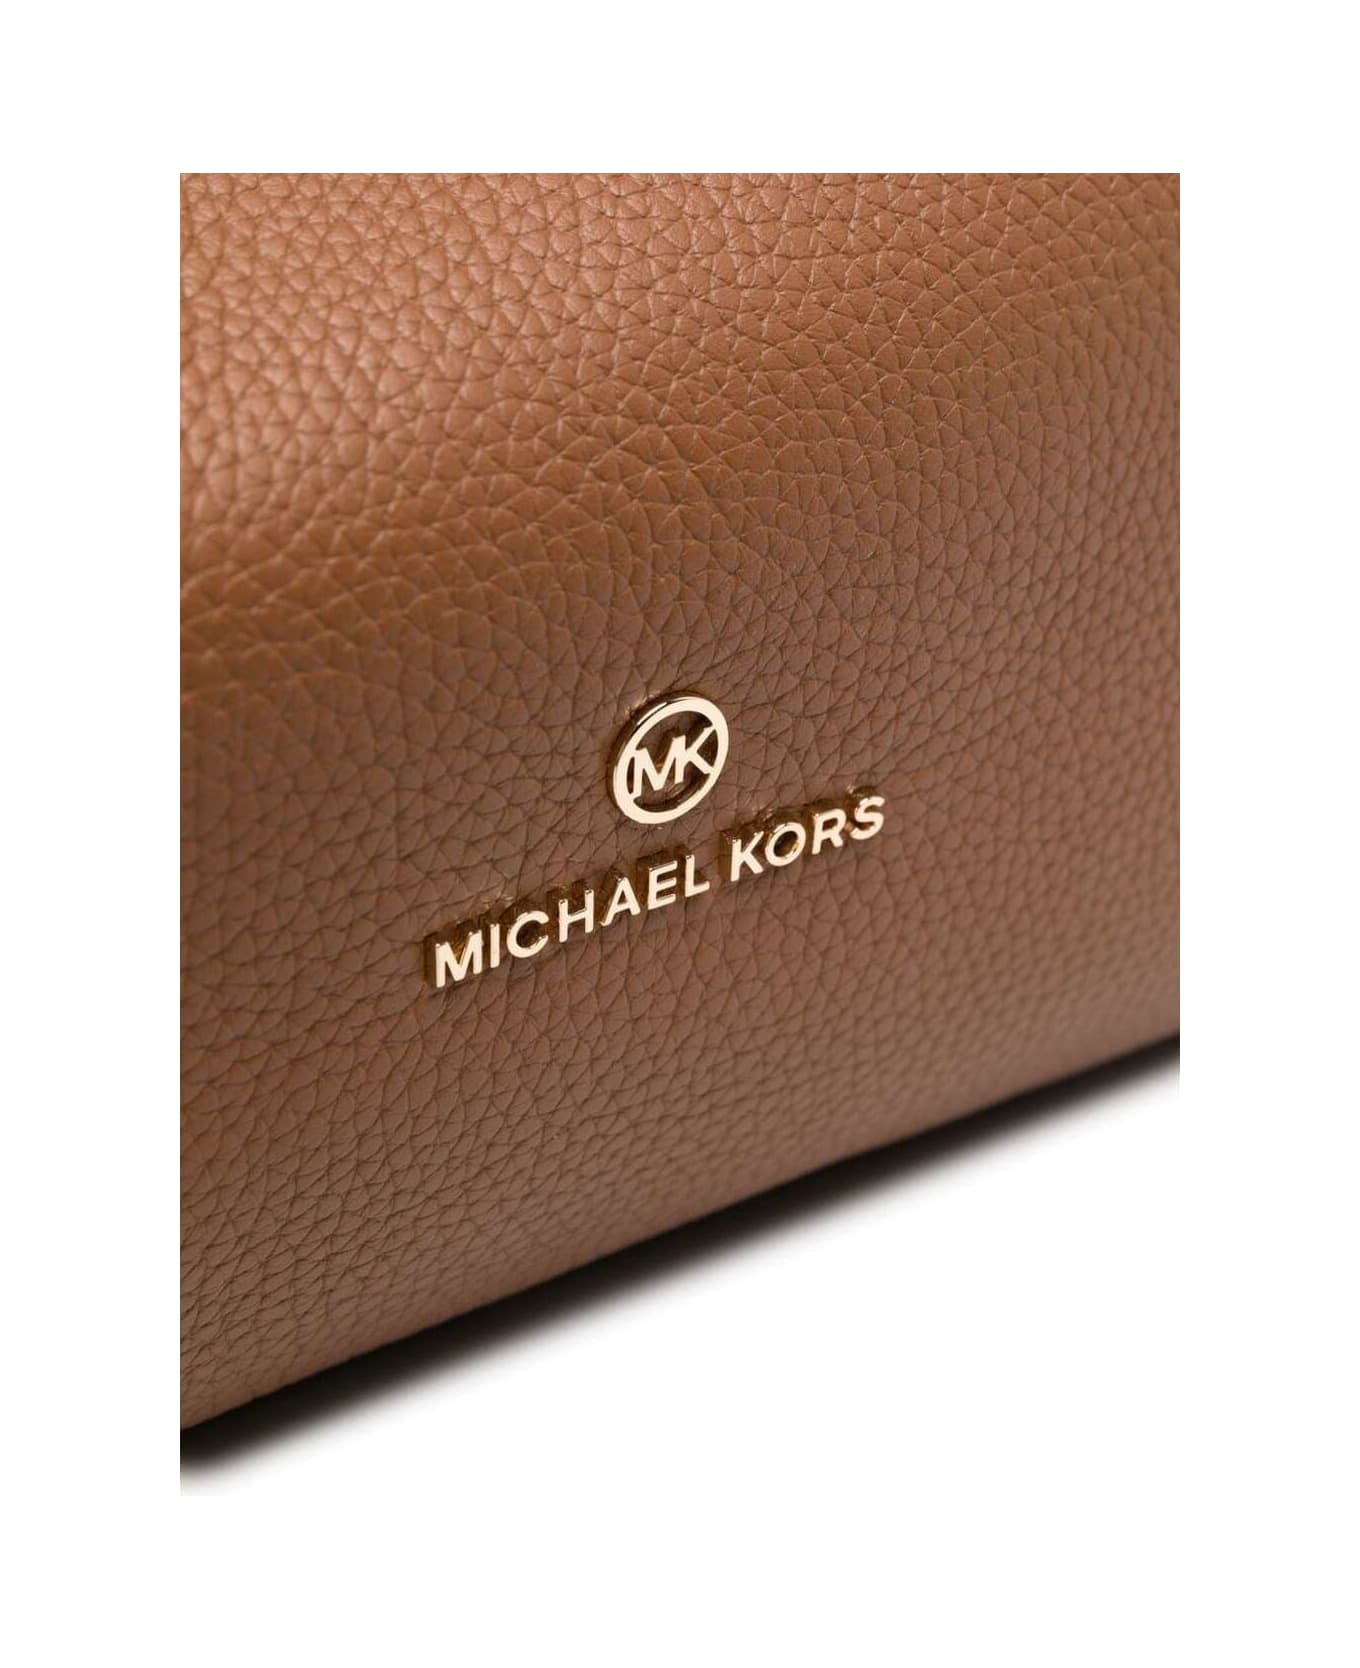 Itacakes on X: A fan of Louis Vuitton? Gucci? Michael Kors